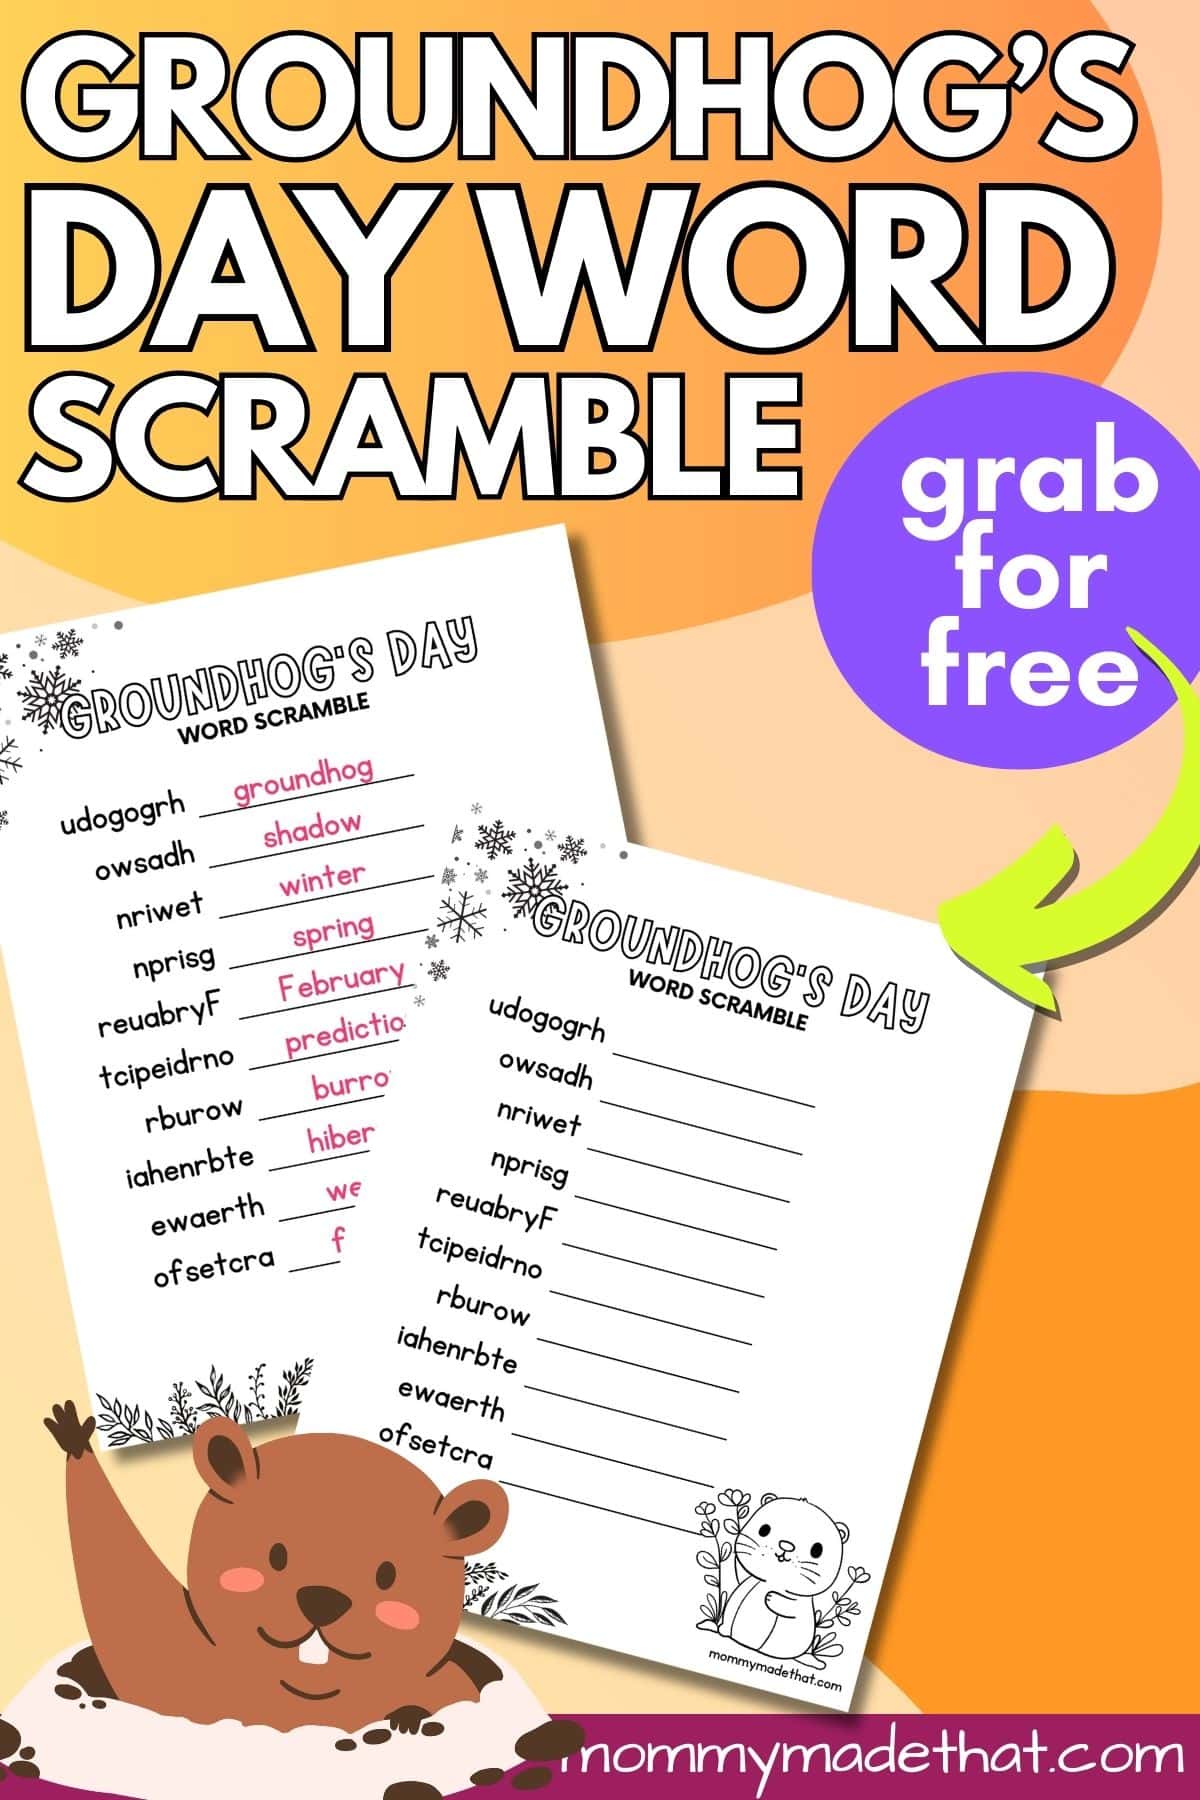 Free Groundhog's day word scramble printable.